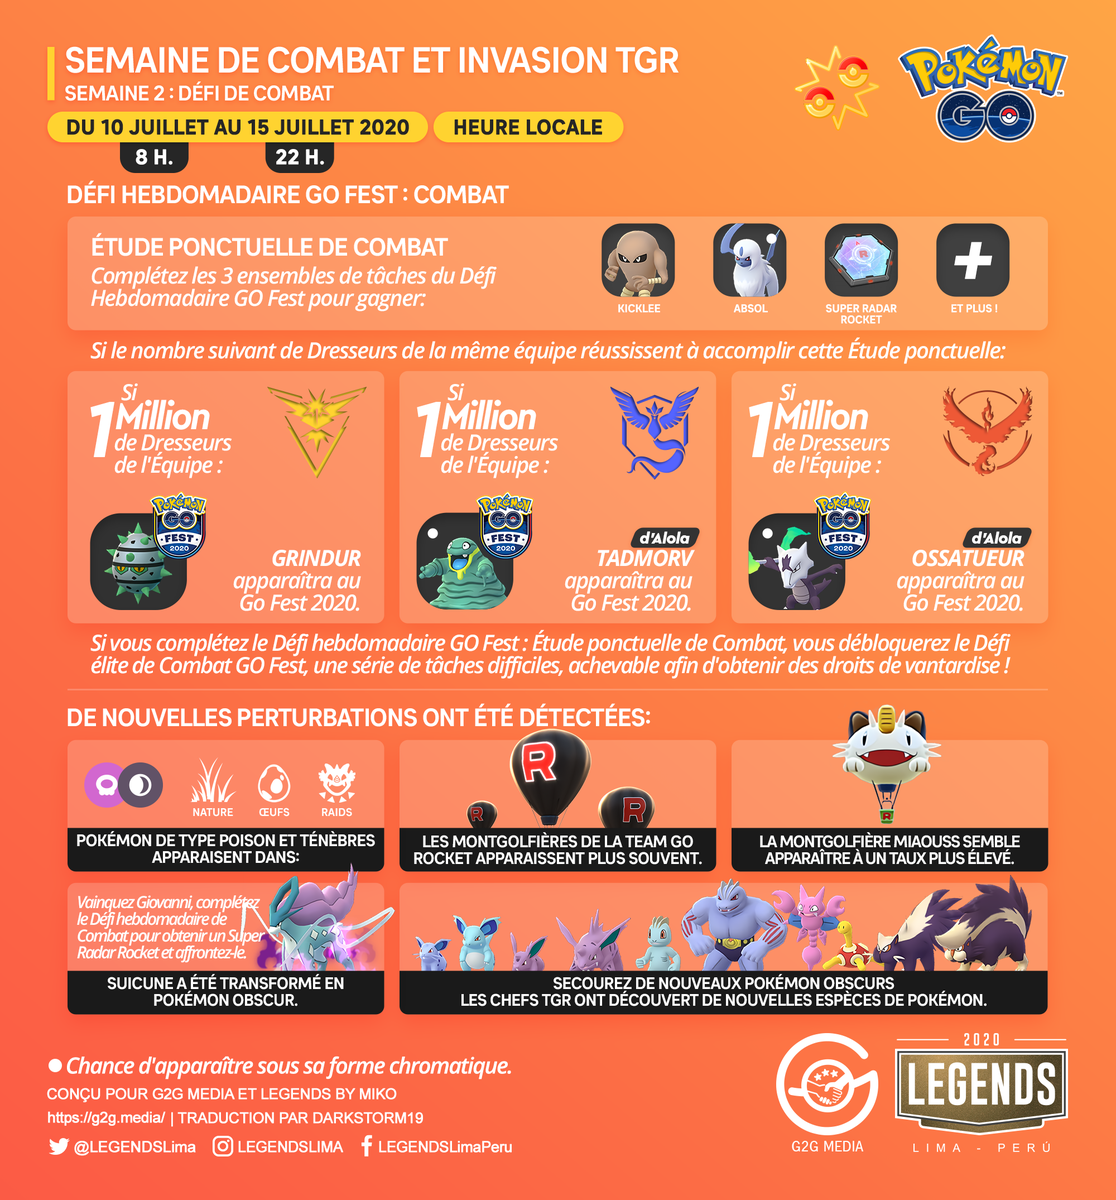 Legendsさんのツイート El Team Go Rocket Se Ha Apoderado Del Desafio Semanal Del Go Fest Pokemongo Pokemongoapp